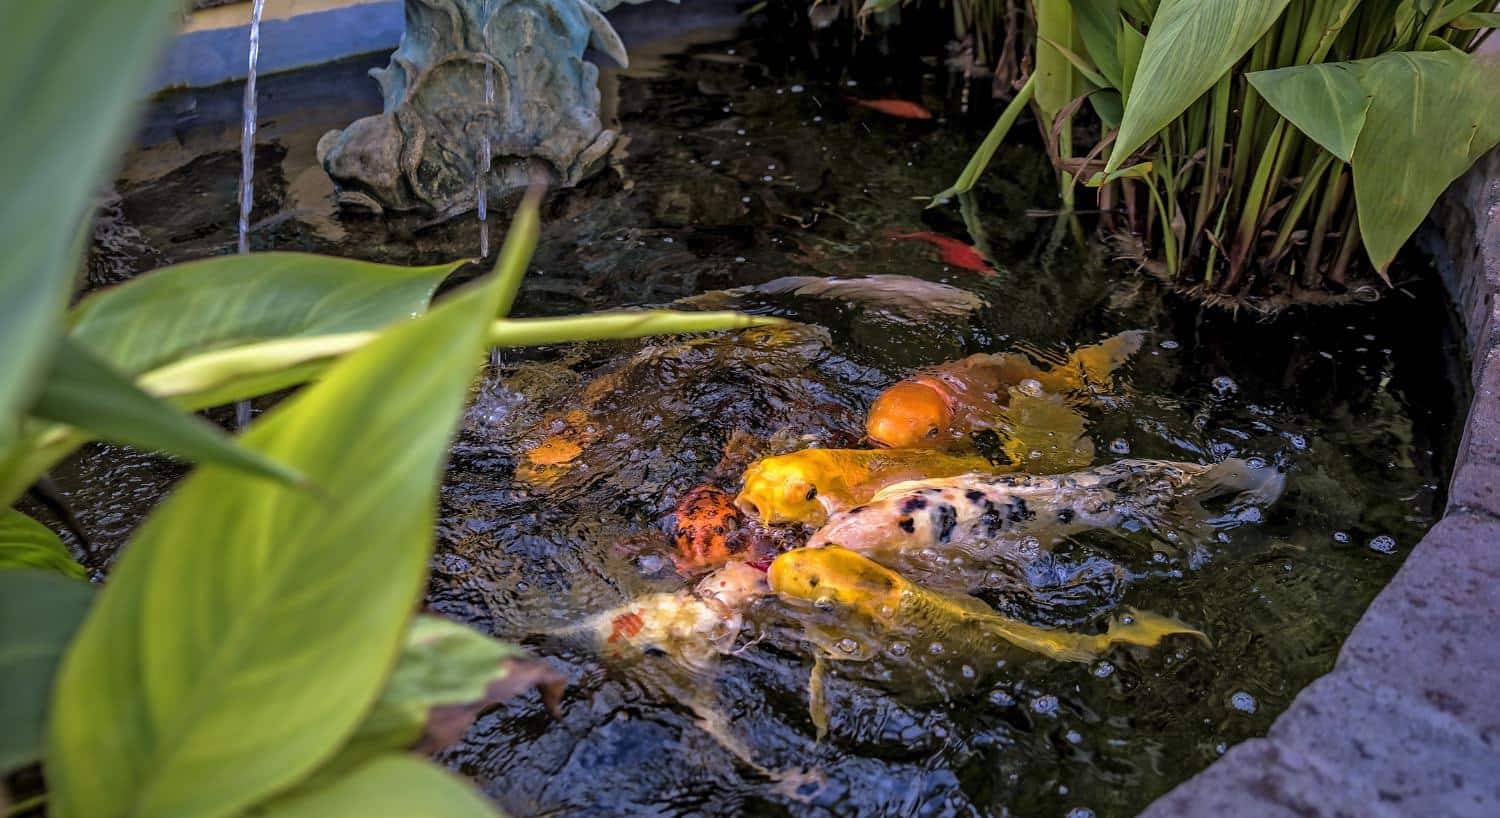 Small brick pond full of koi fish colored yellow, orange and salmon